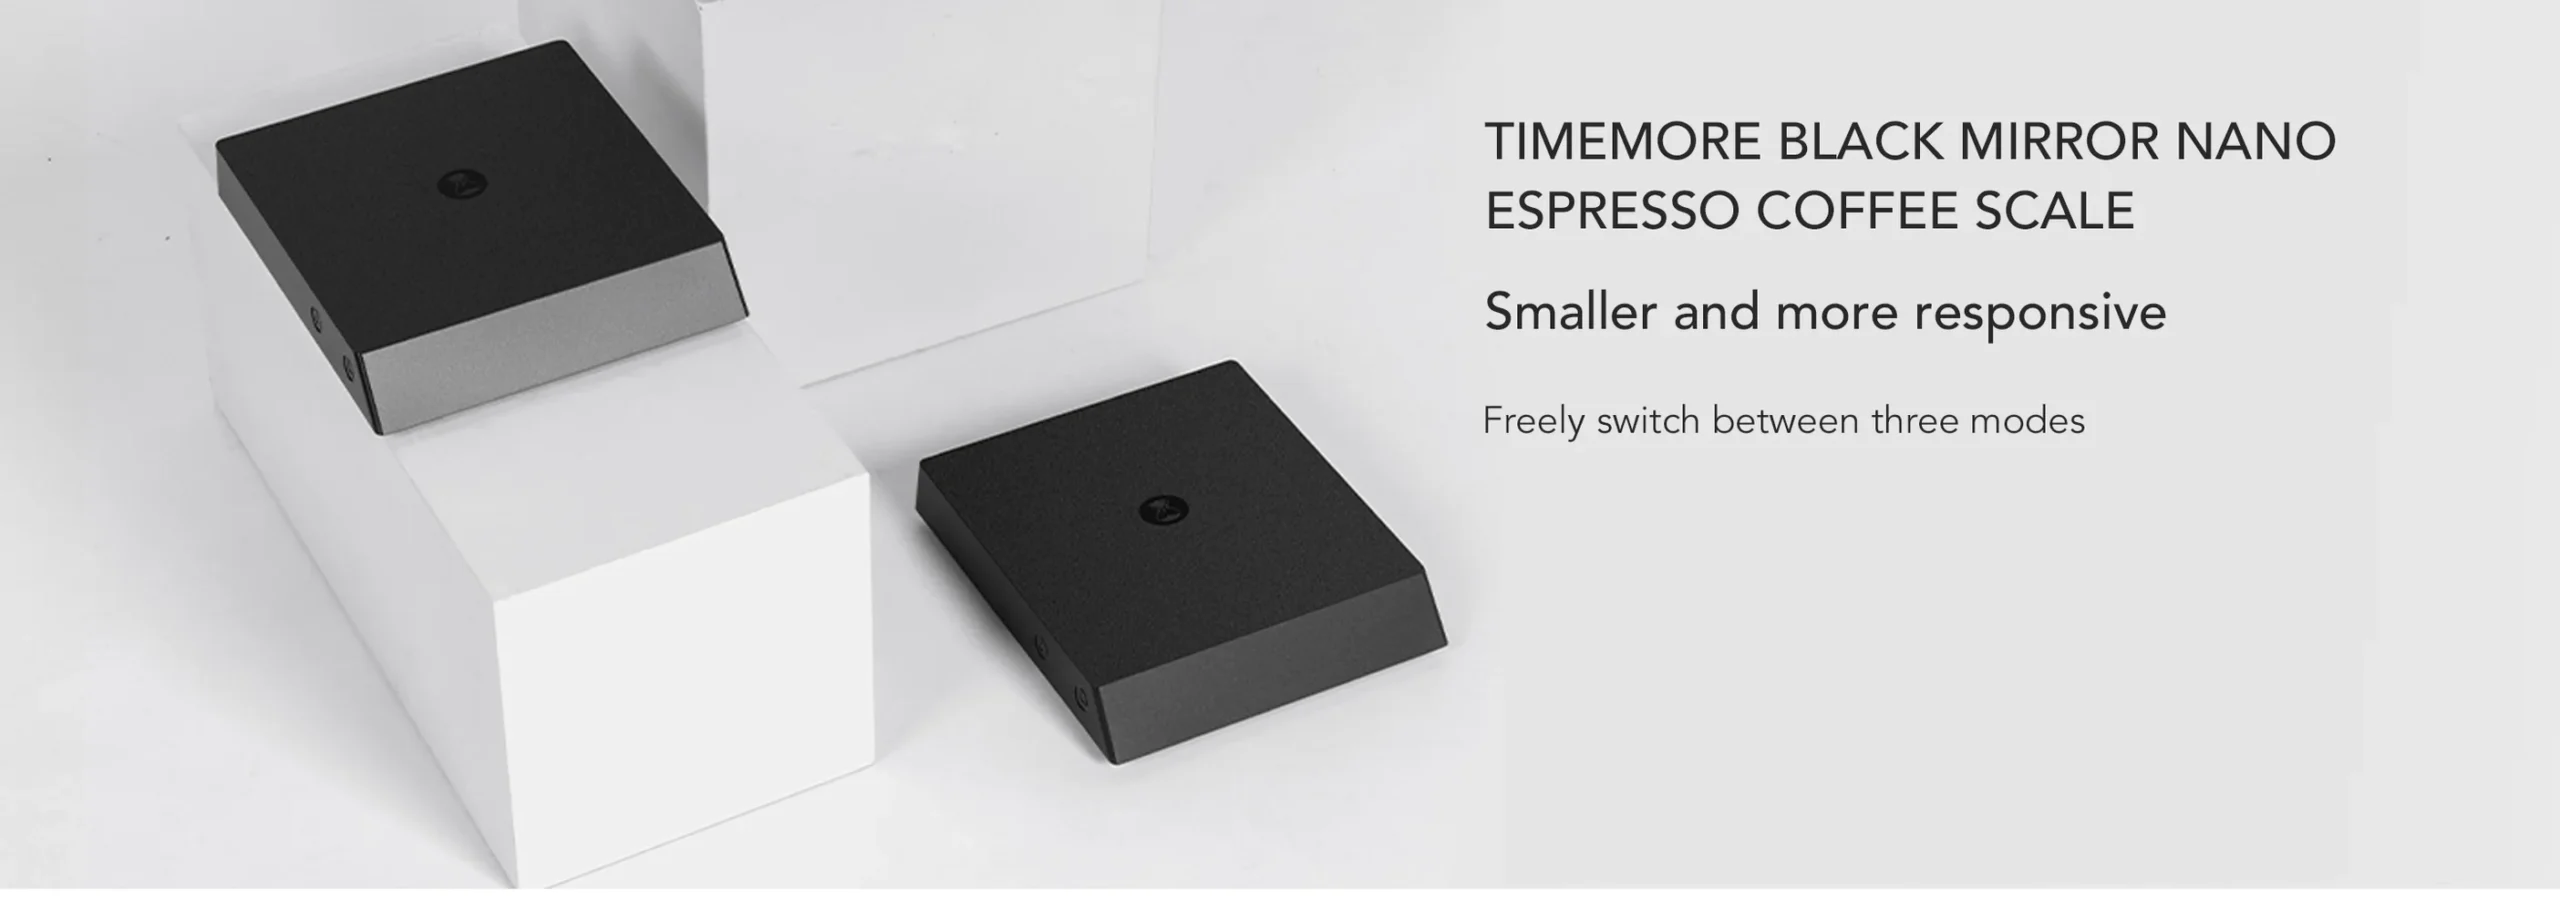 Timemore Black Mirror Nano Coffee Scale with Timer